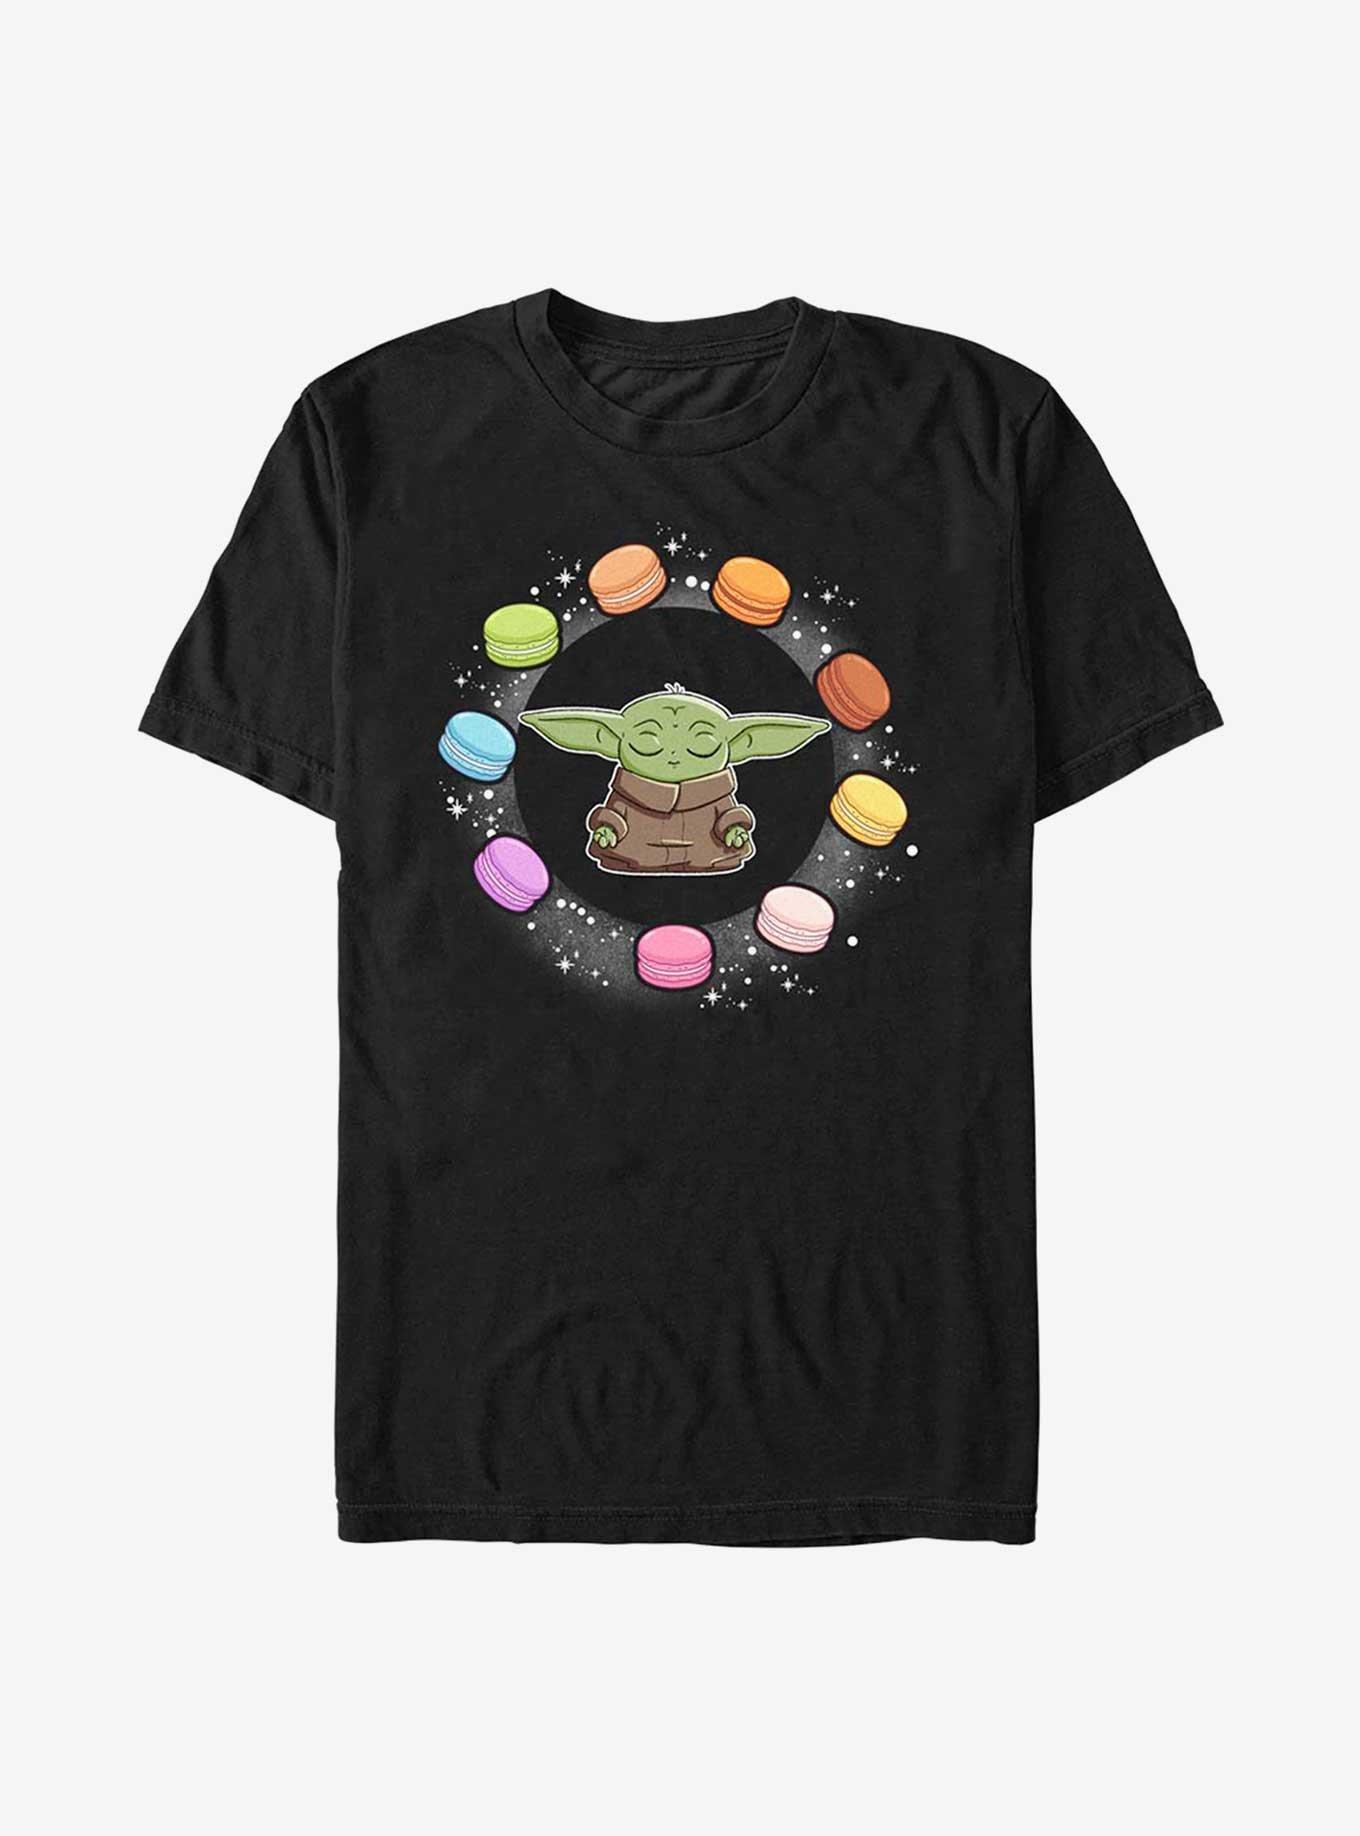 Star Wars The Mandalorian Galaxy Macarons T-Shirt